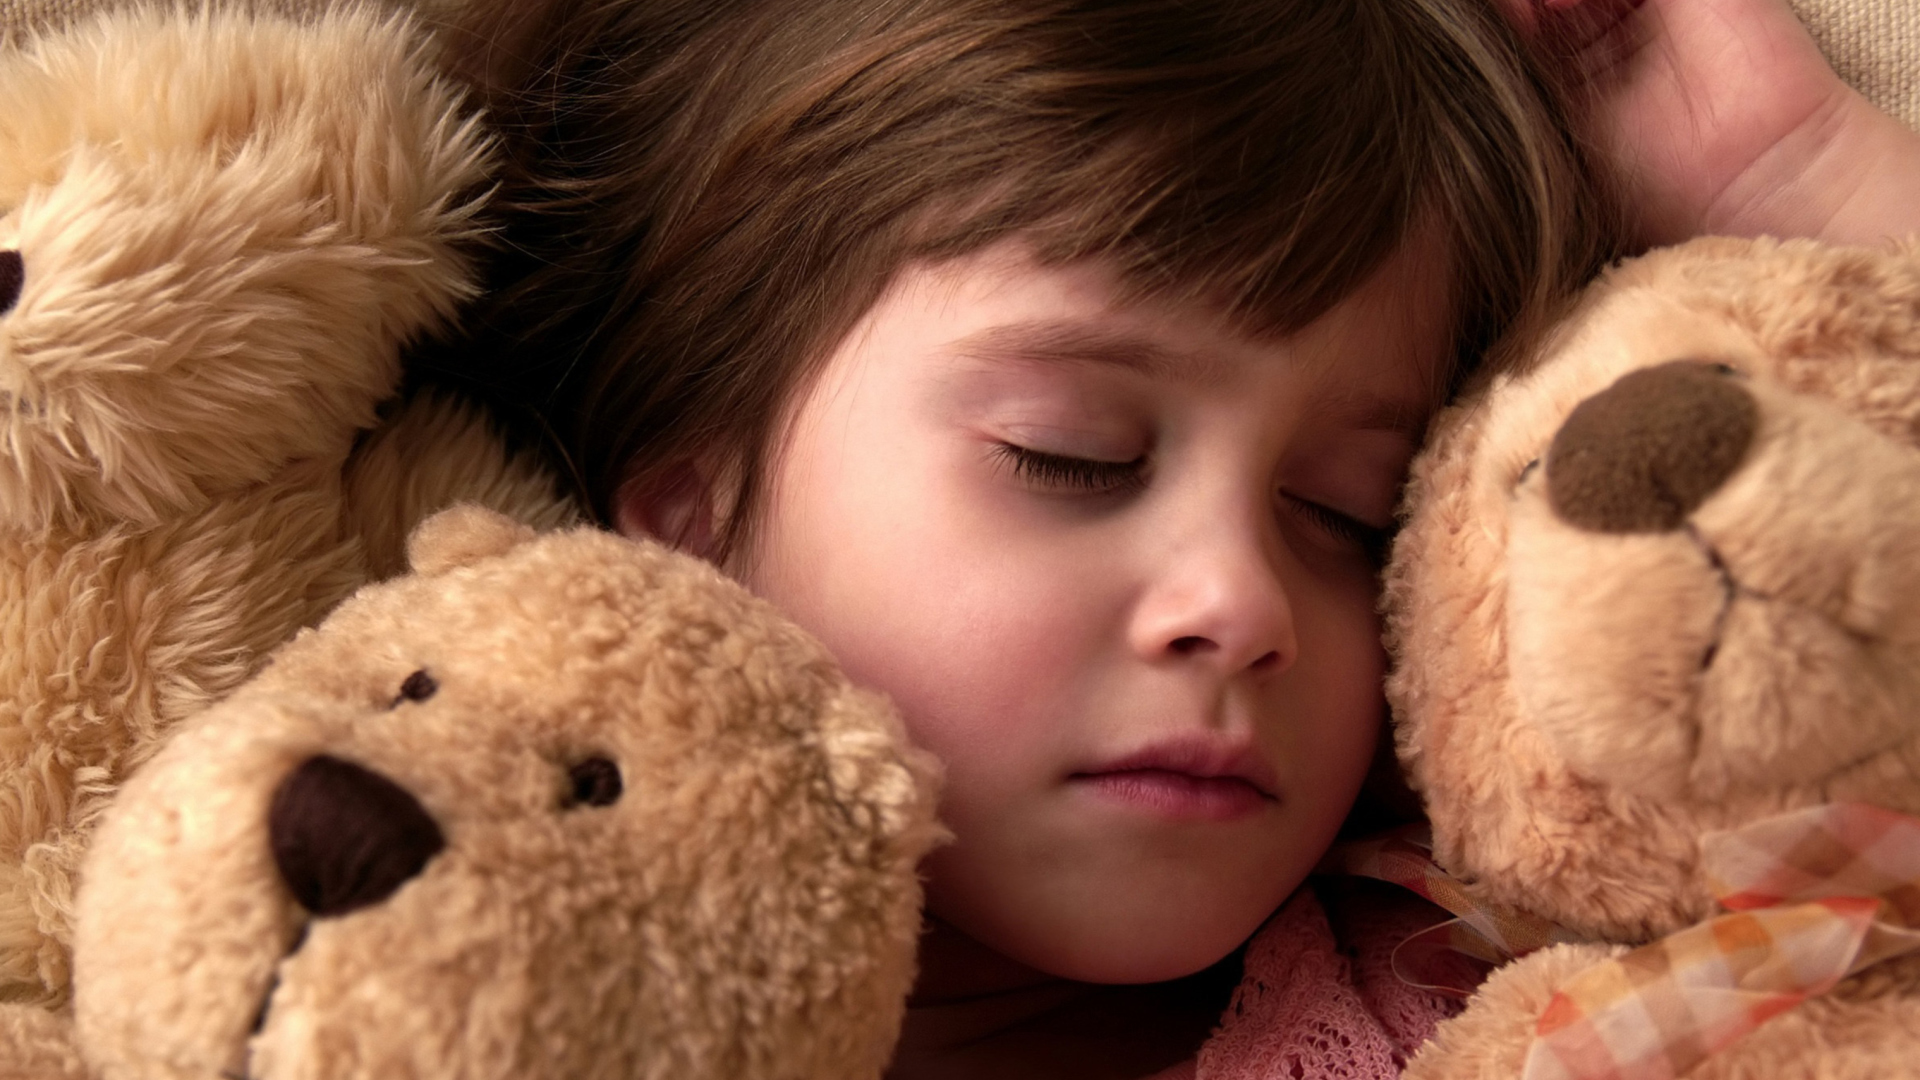 Das Child Sleeping With Teddy Bear Wallpaper 1920x1080